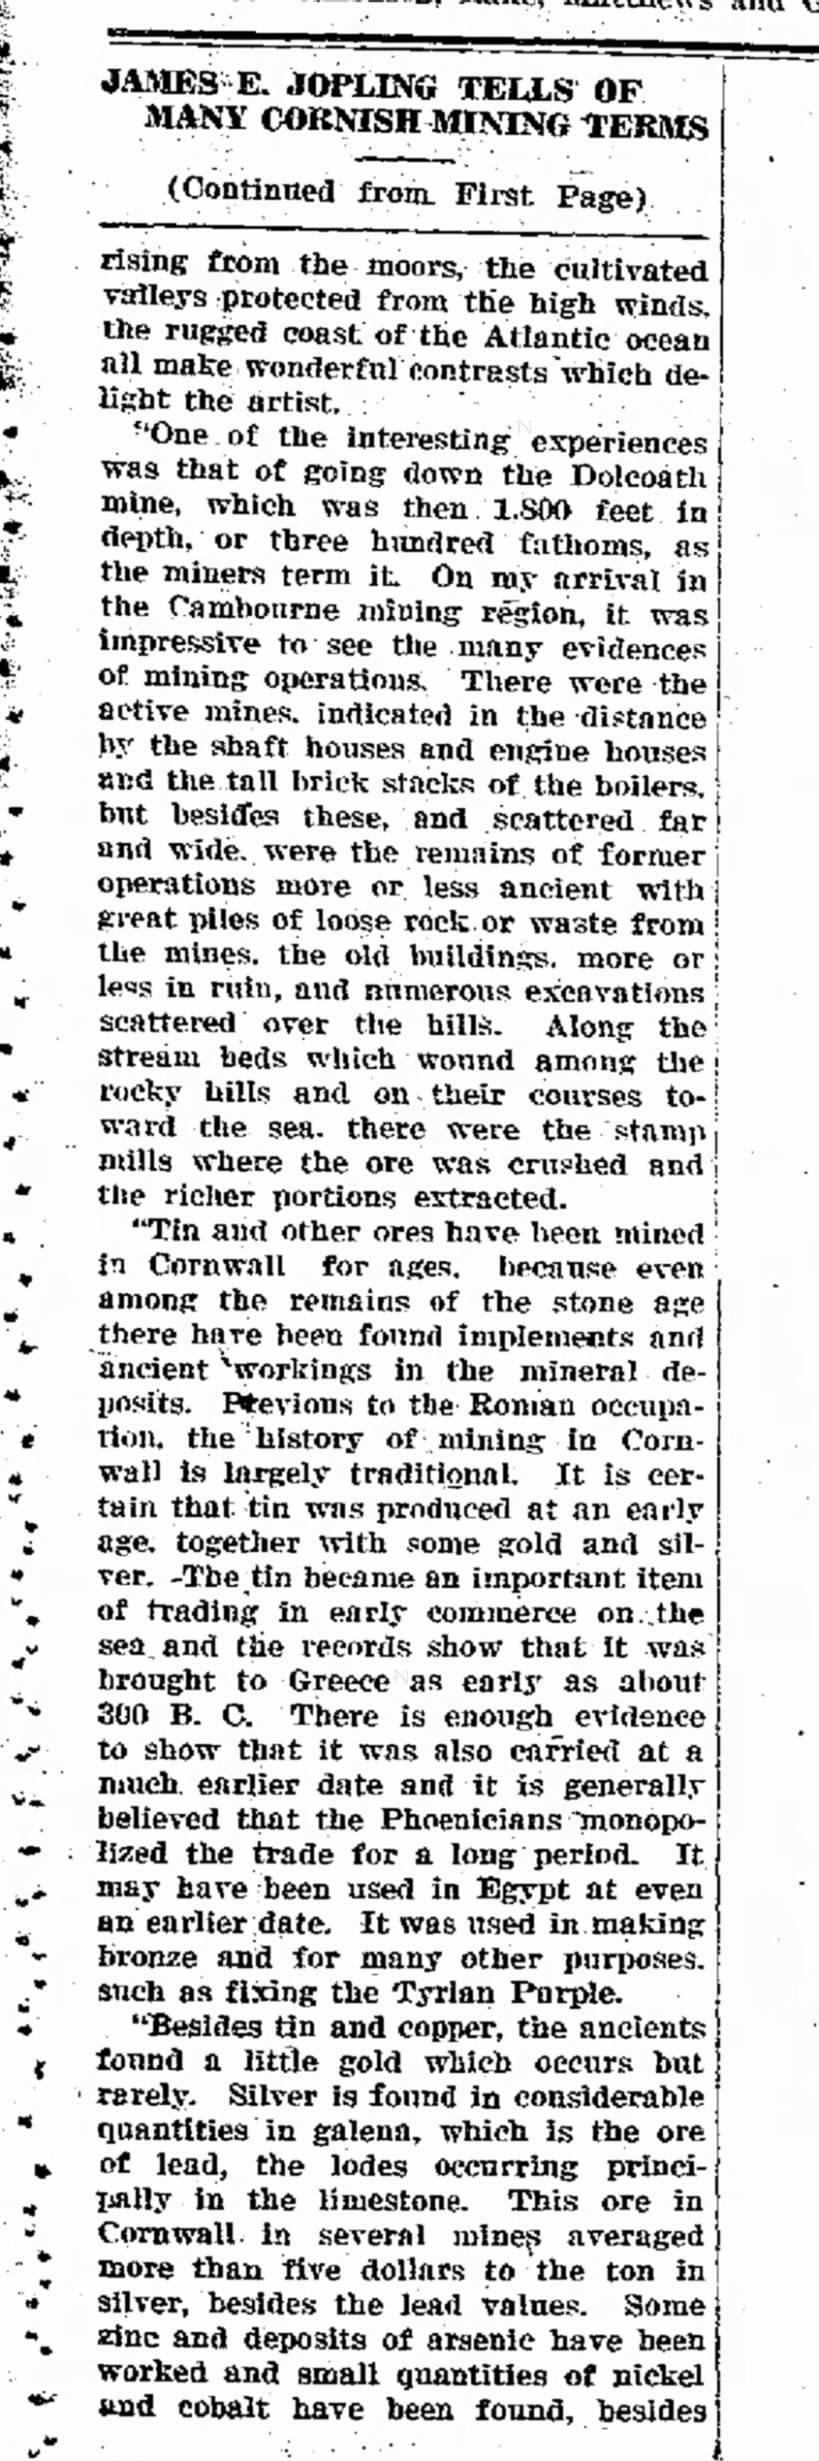 Jopling Tells of Cornishmen
The Wakefield News 
13 Aug 1927 Part 2